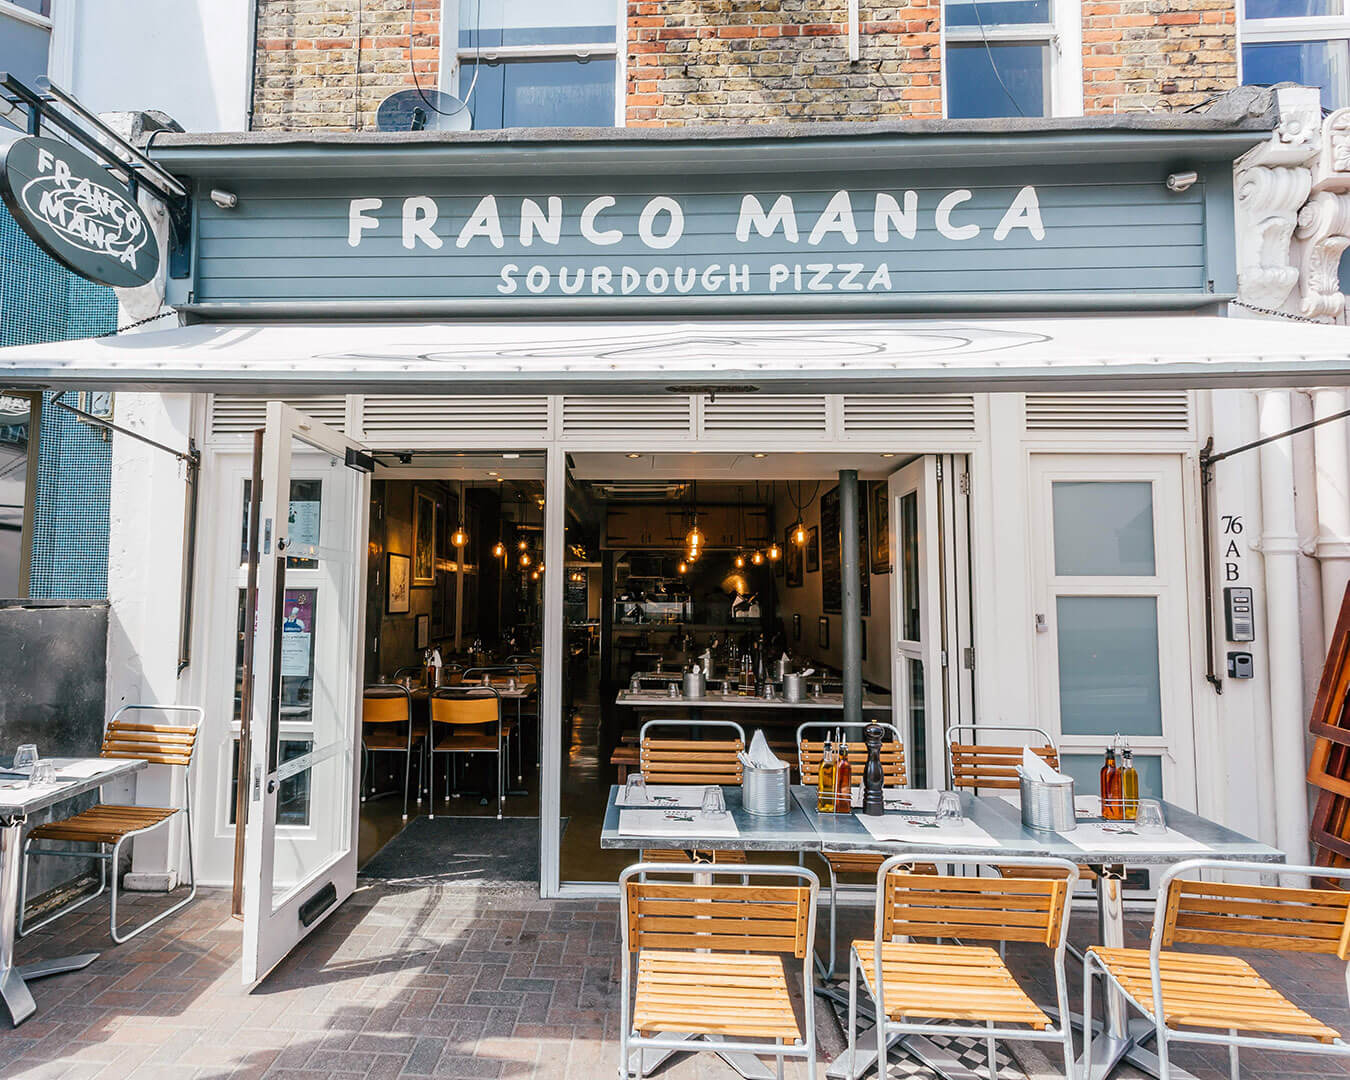 Franco Manca pizzeria on Northcote Road